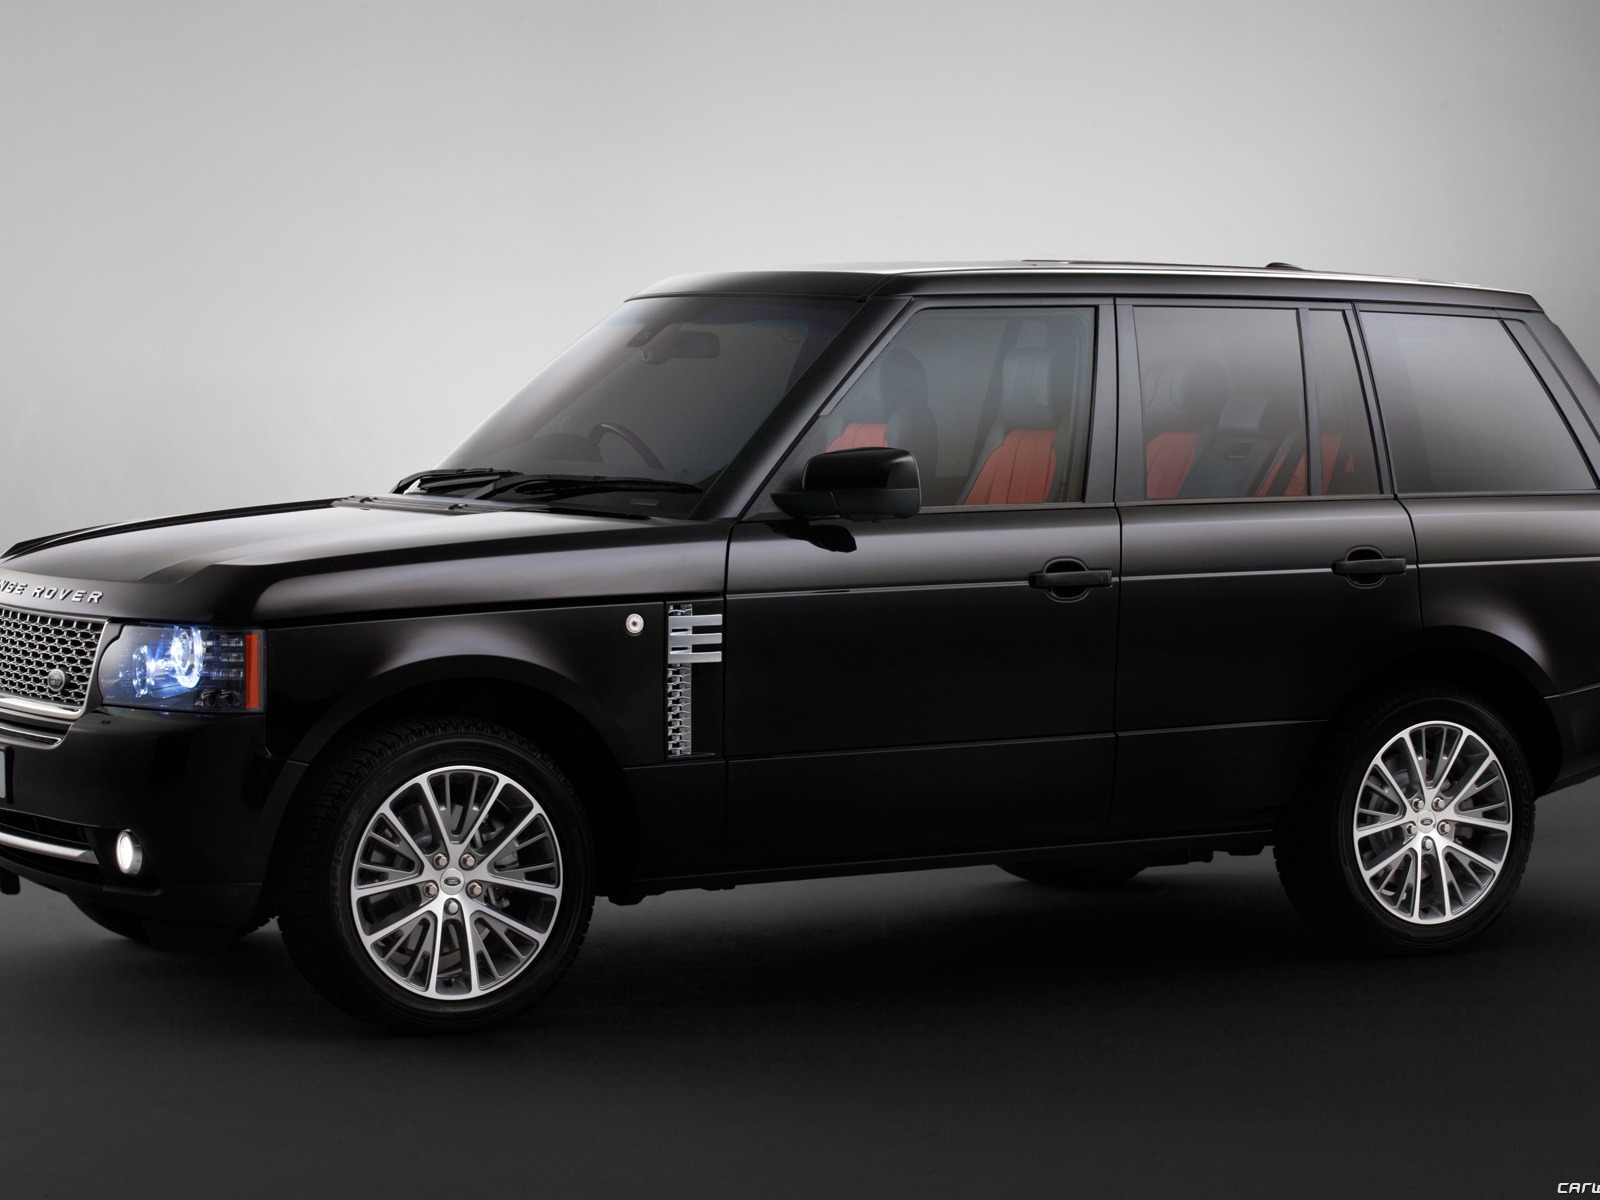 Land Rover Range Rover Black Edition - 2011 路虎17 - 1600x1200